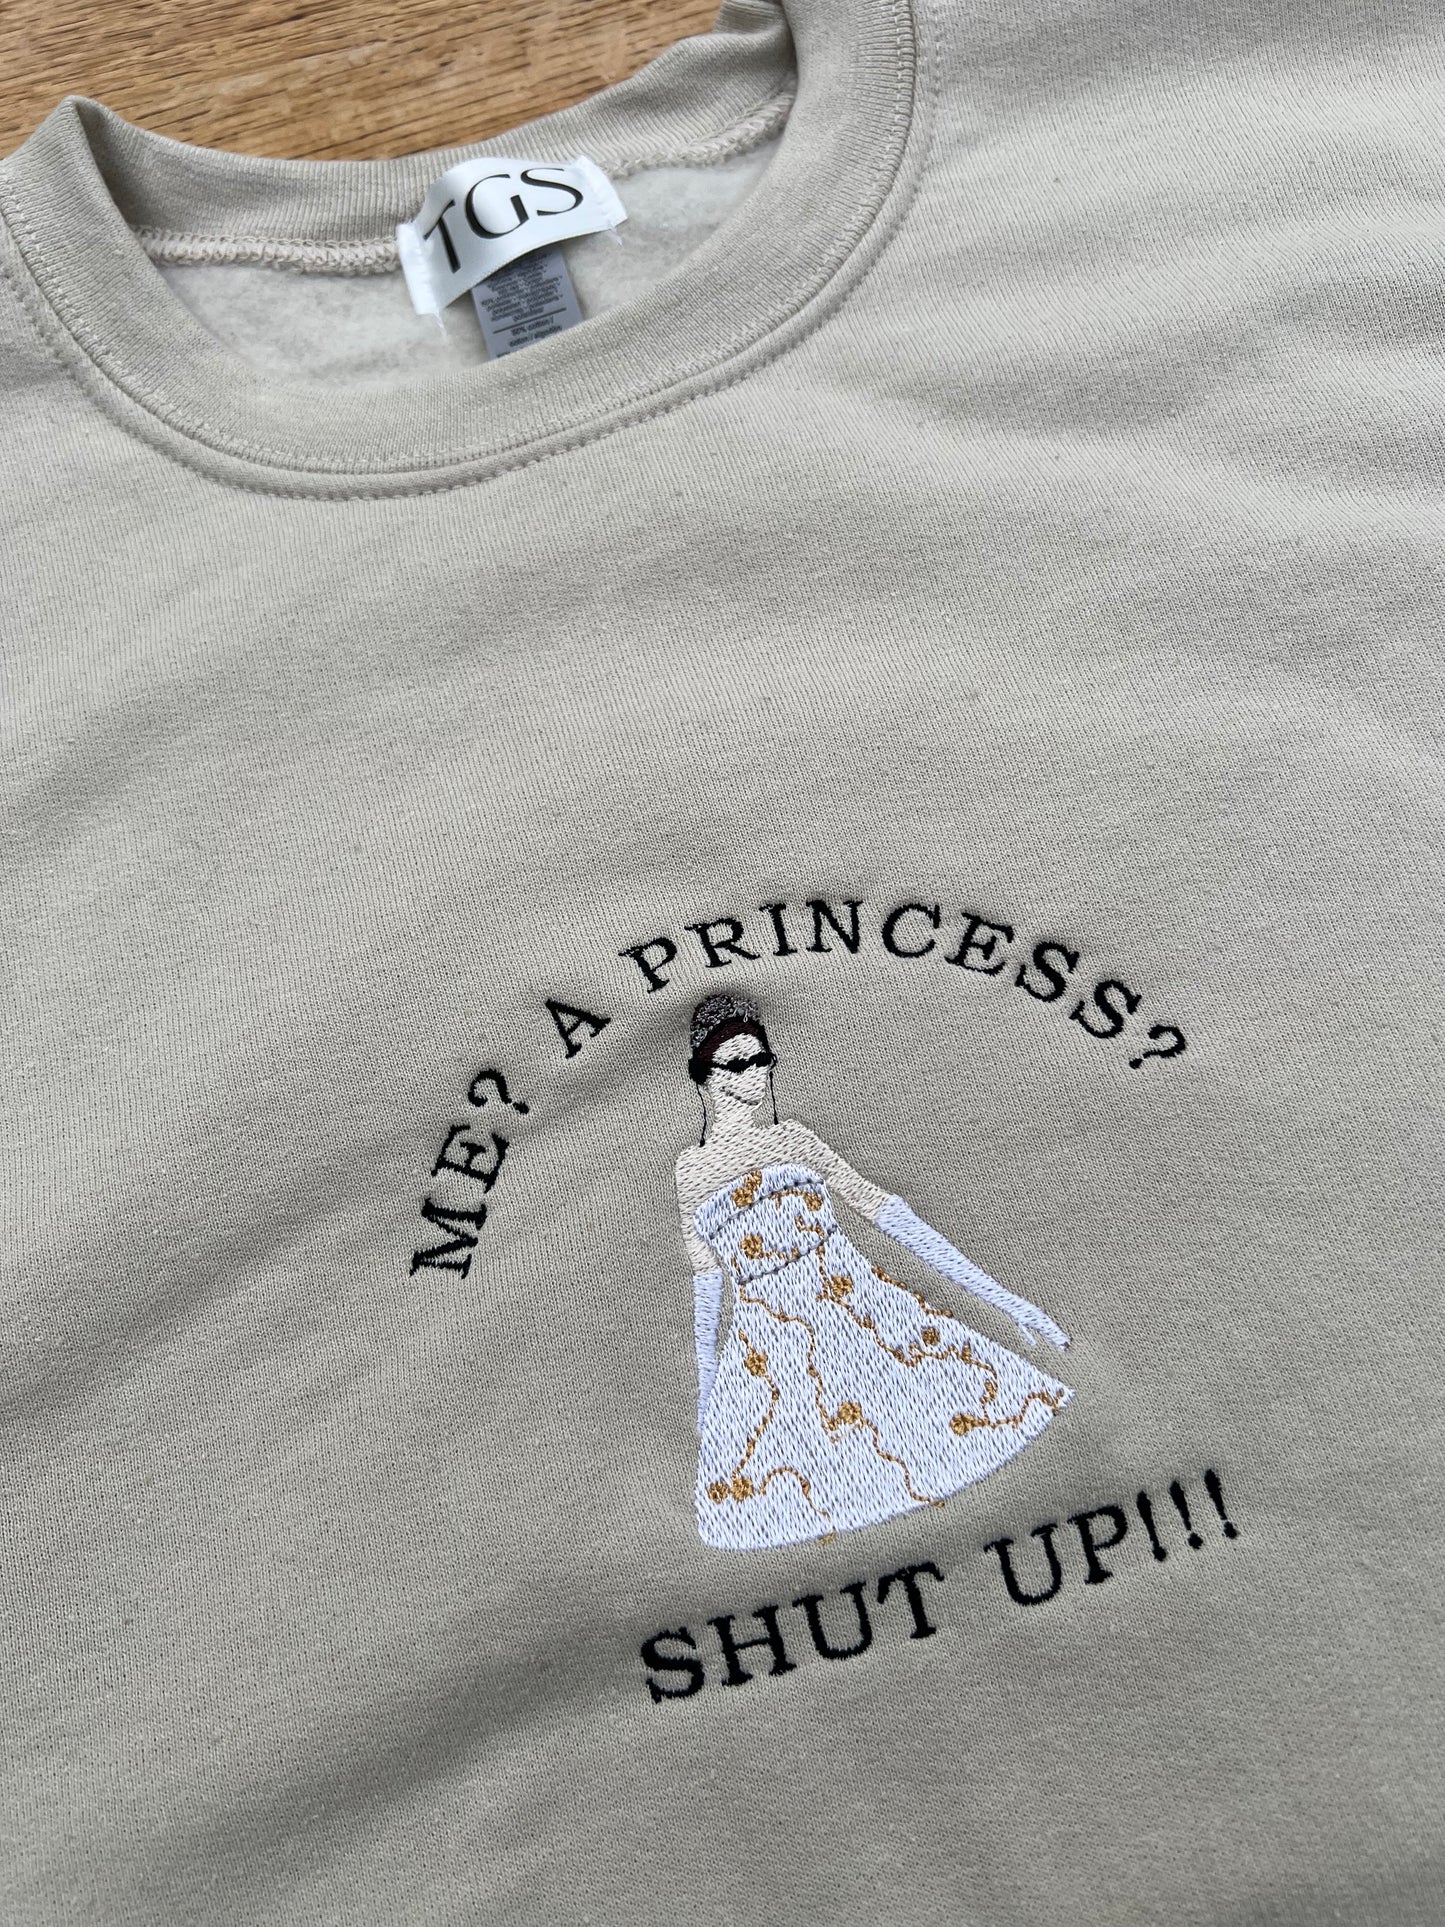 Me? A Princess? Shut Up!!!